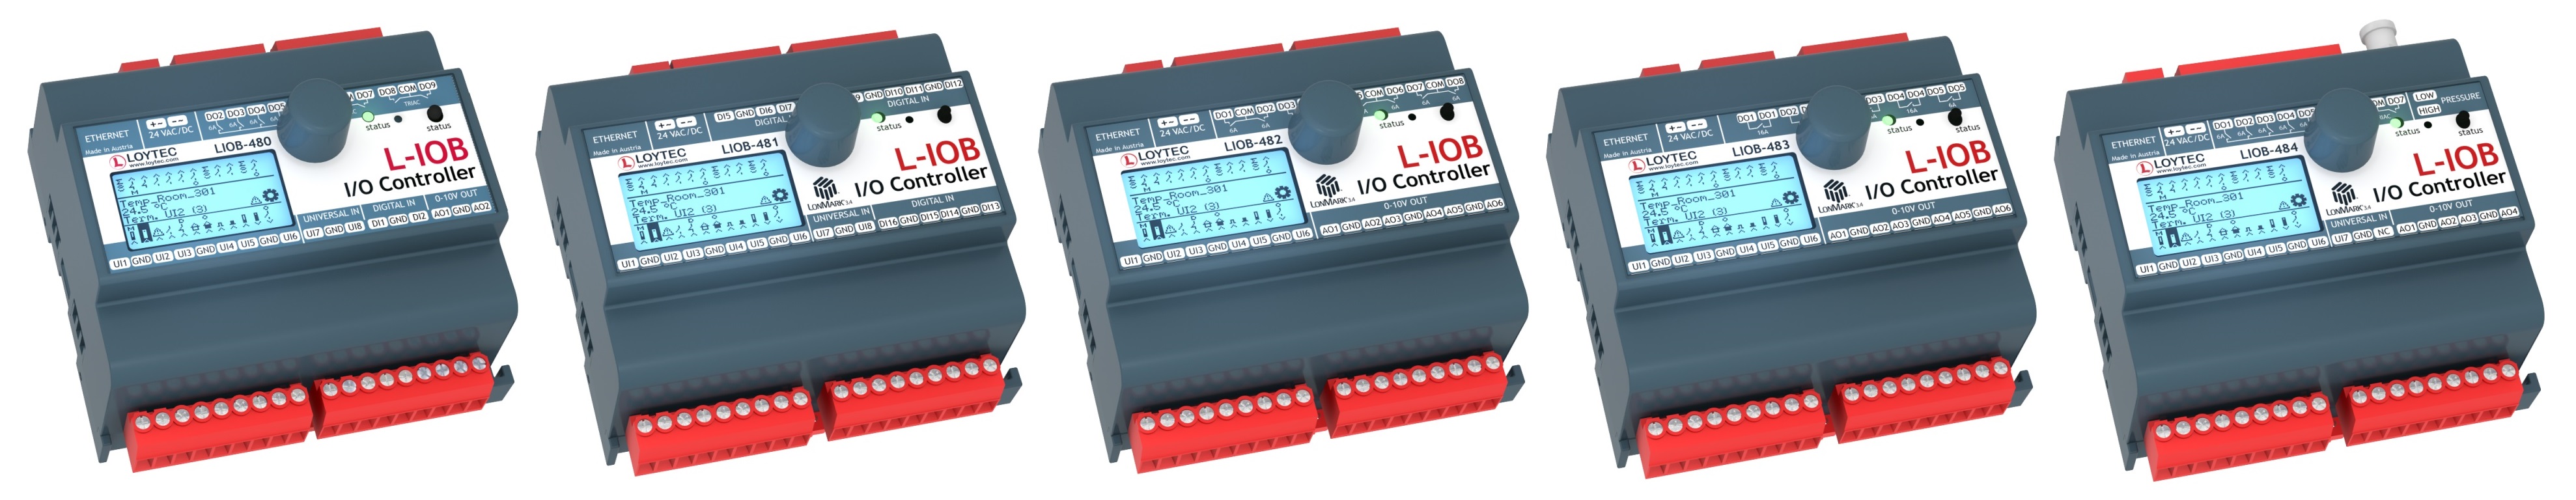 LIOB-IP852 I/O Controller LonMark